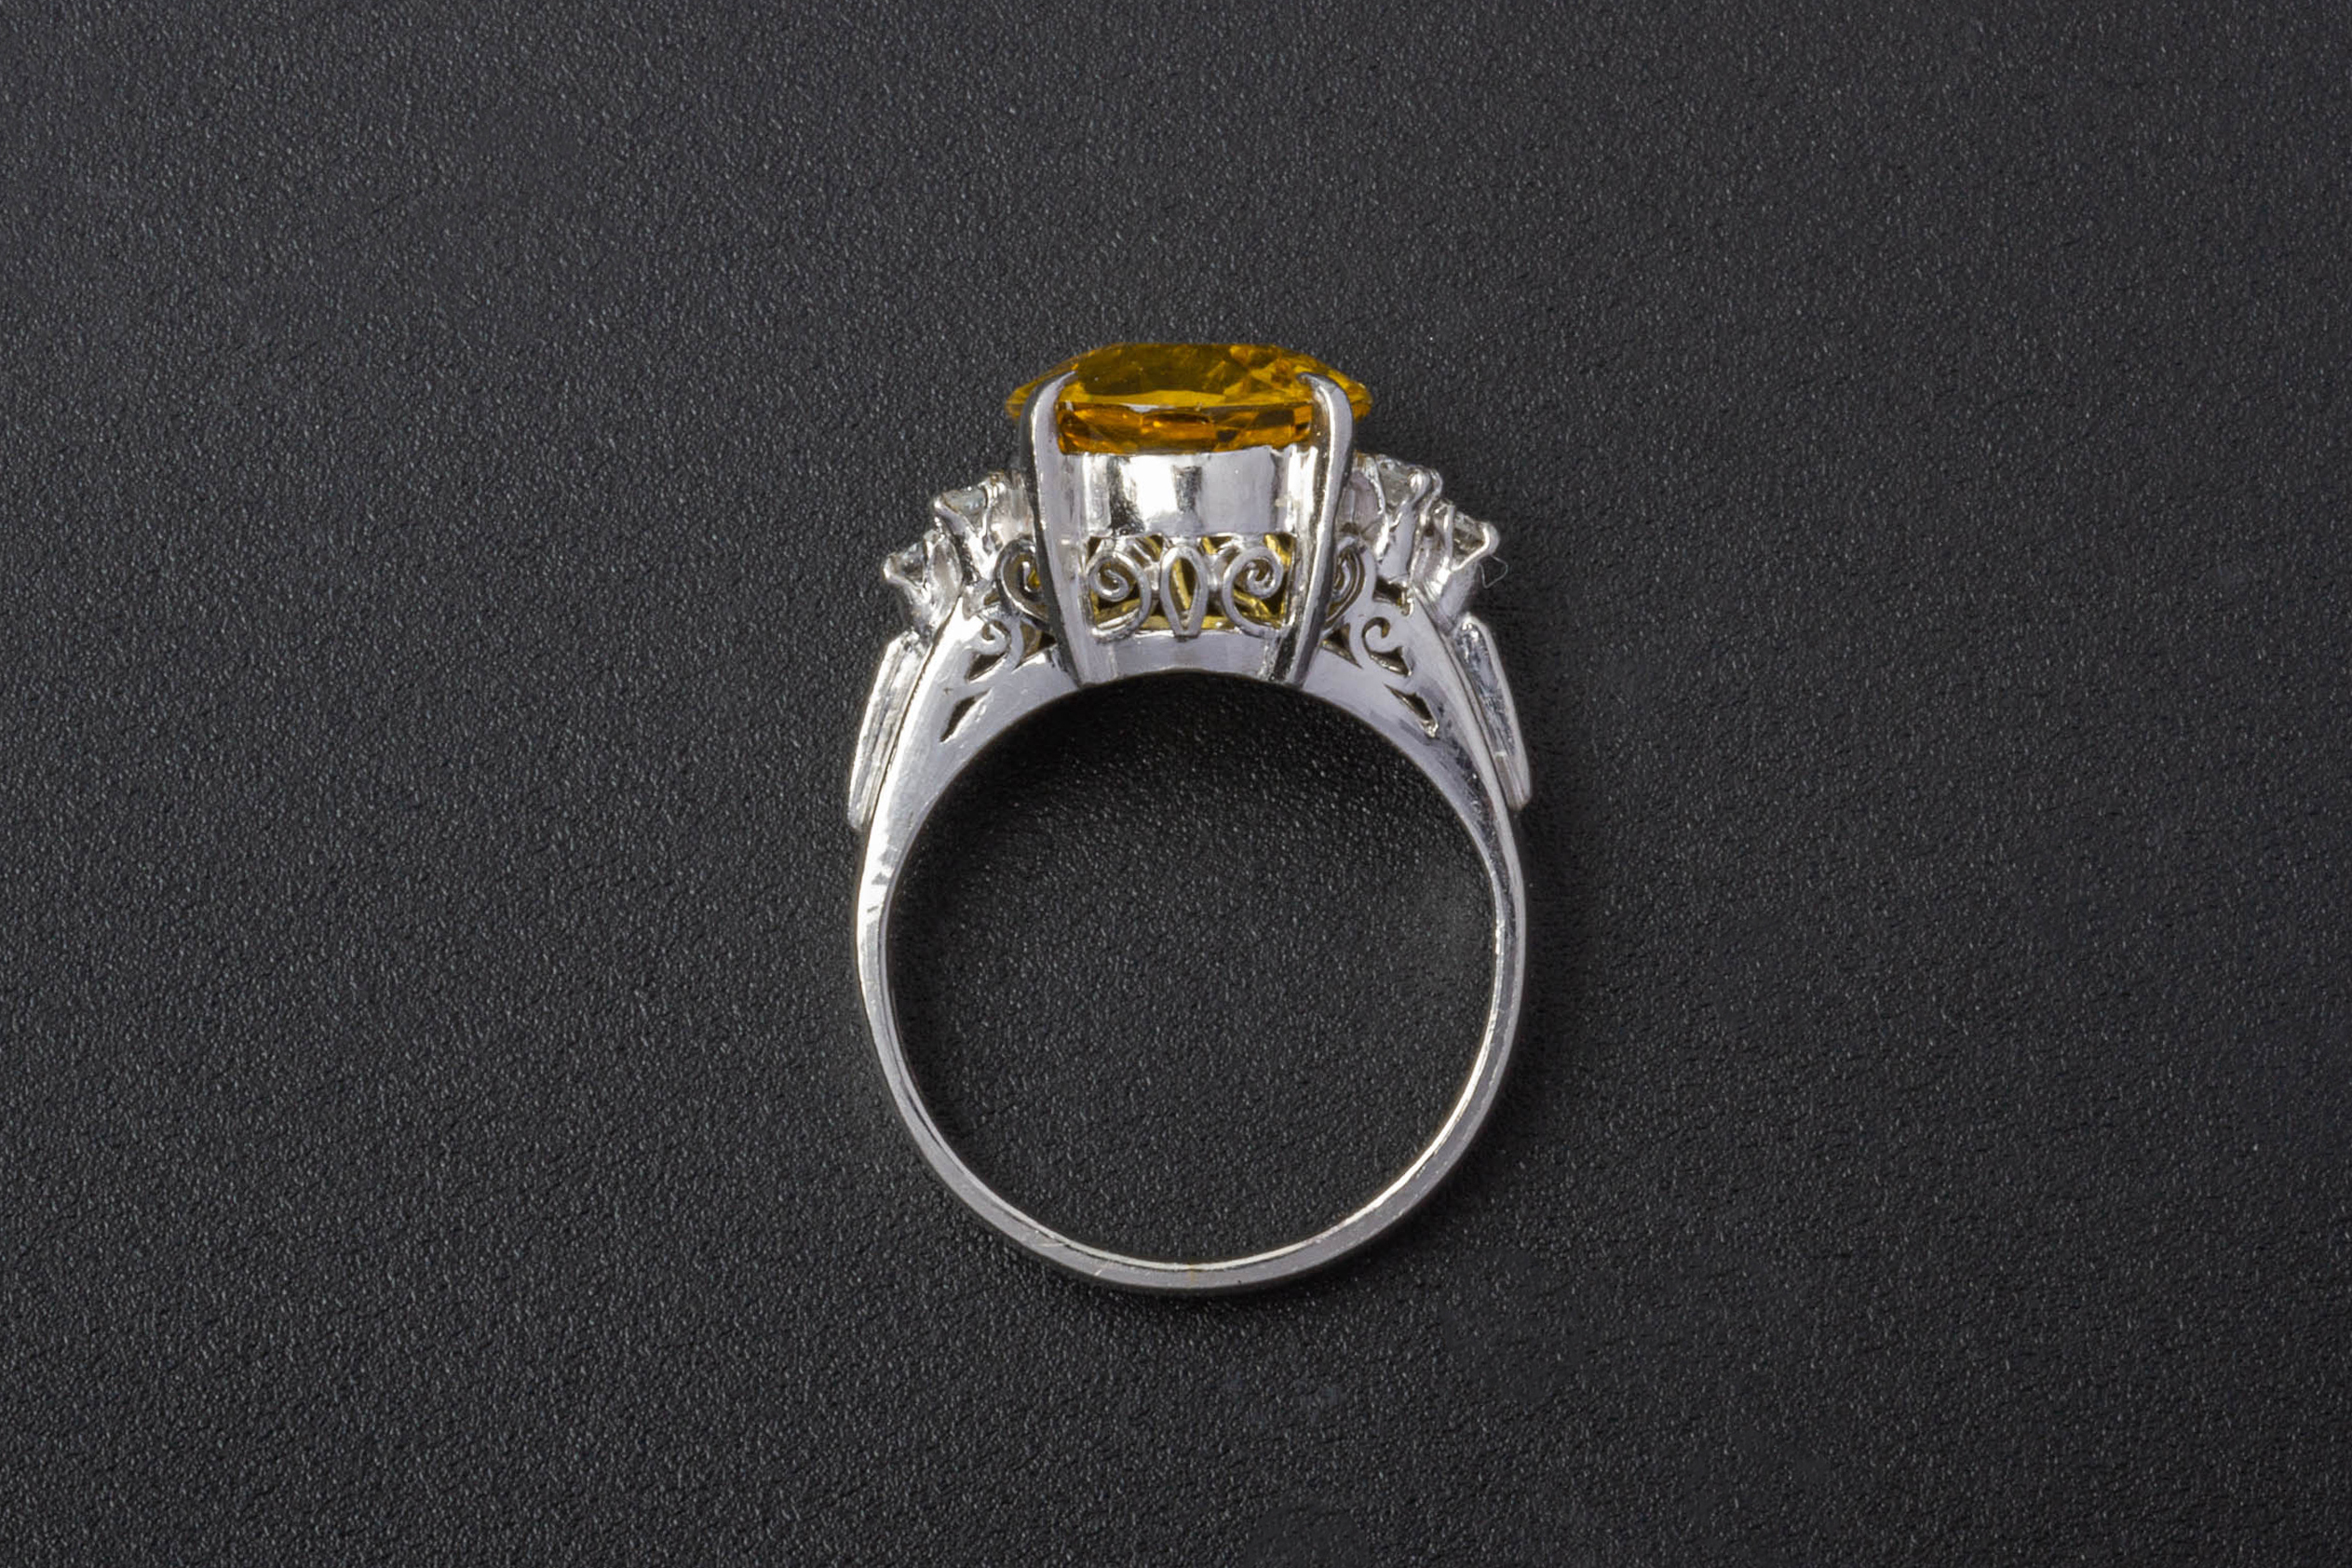 A YELLOW BERYL AND DIAMOND RING - Image 2 of 3